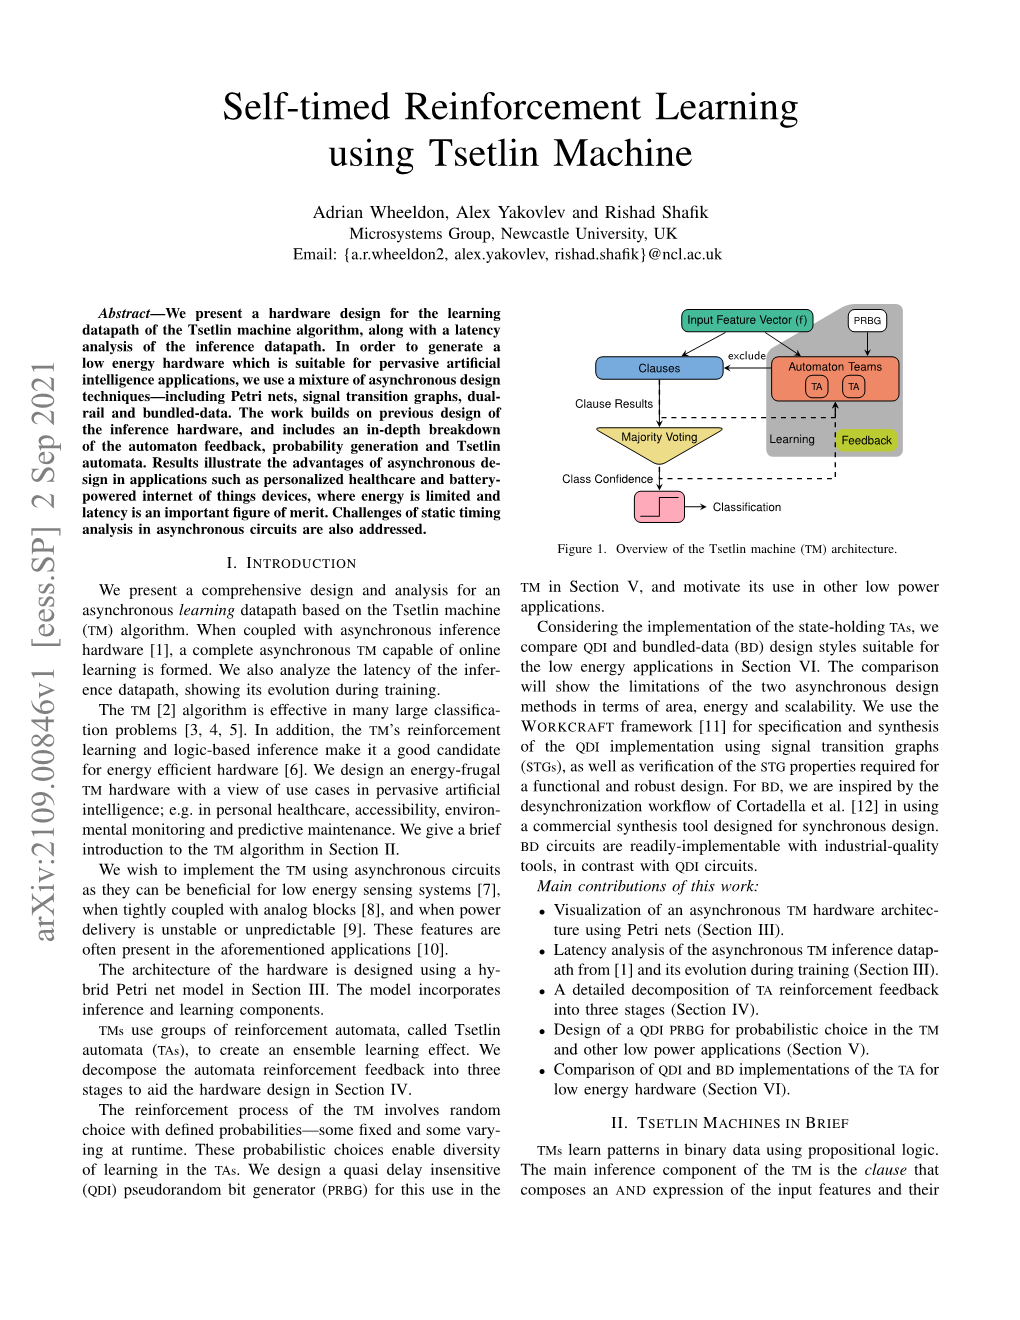 Self-Timed Reinforcement Learning Using Tsetlin Machine